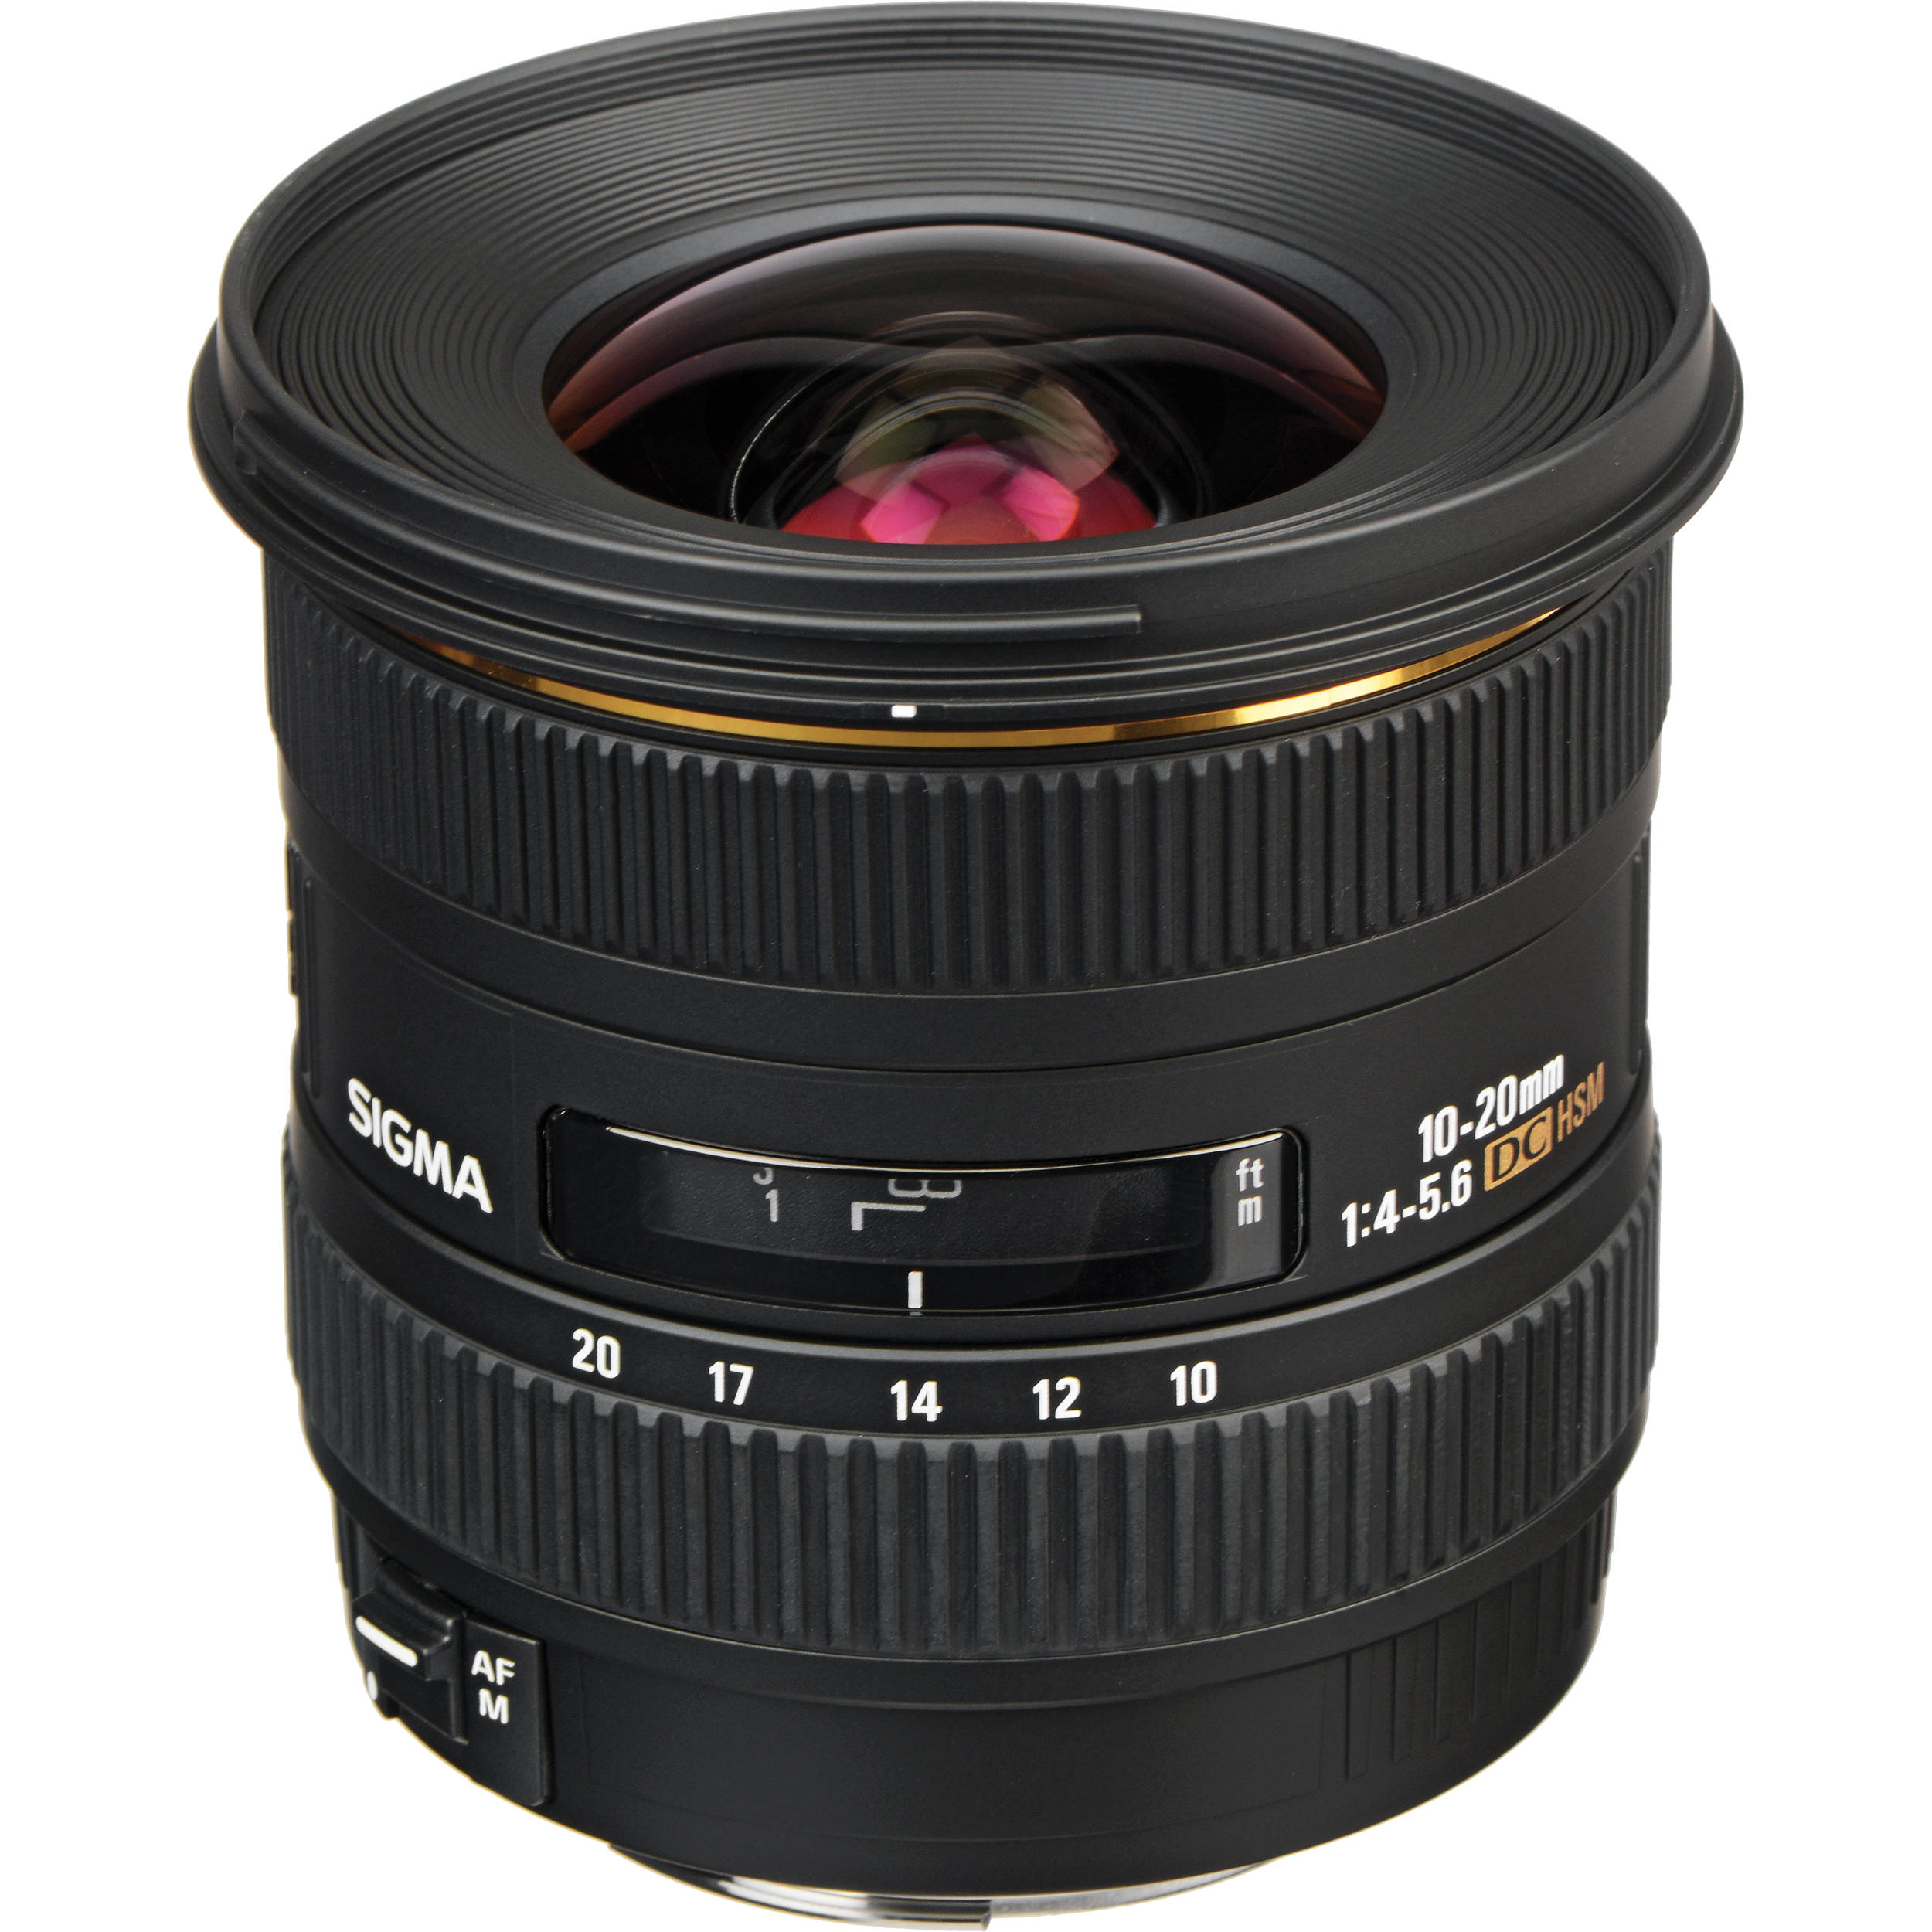 Used Sigma 10-20mm f/4-5.6 DC HSM EX for Nikon F [271433]